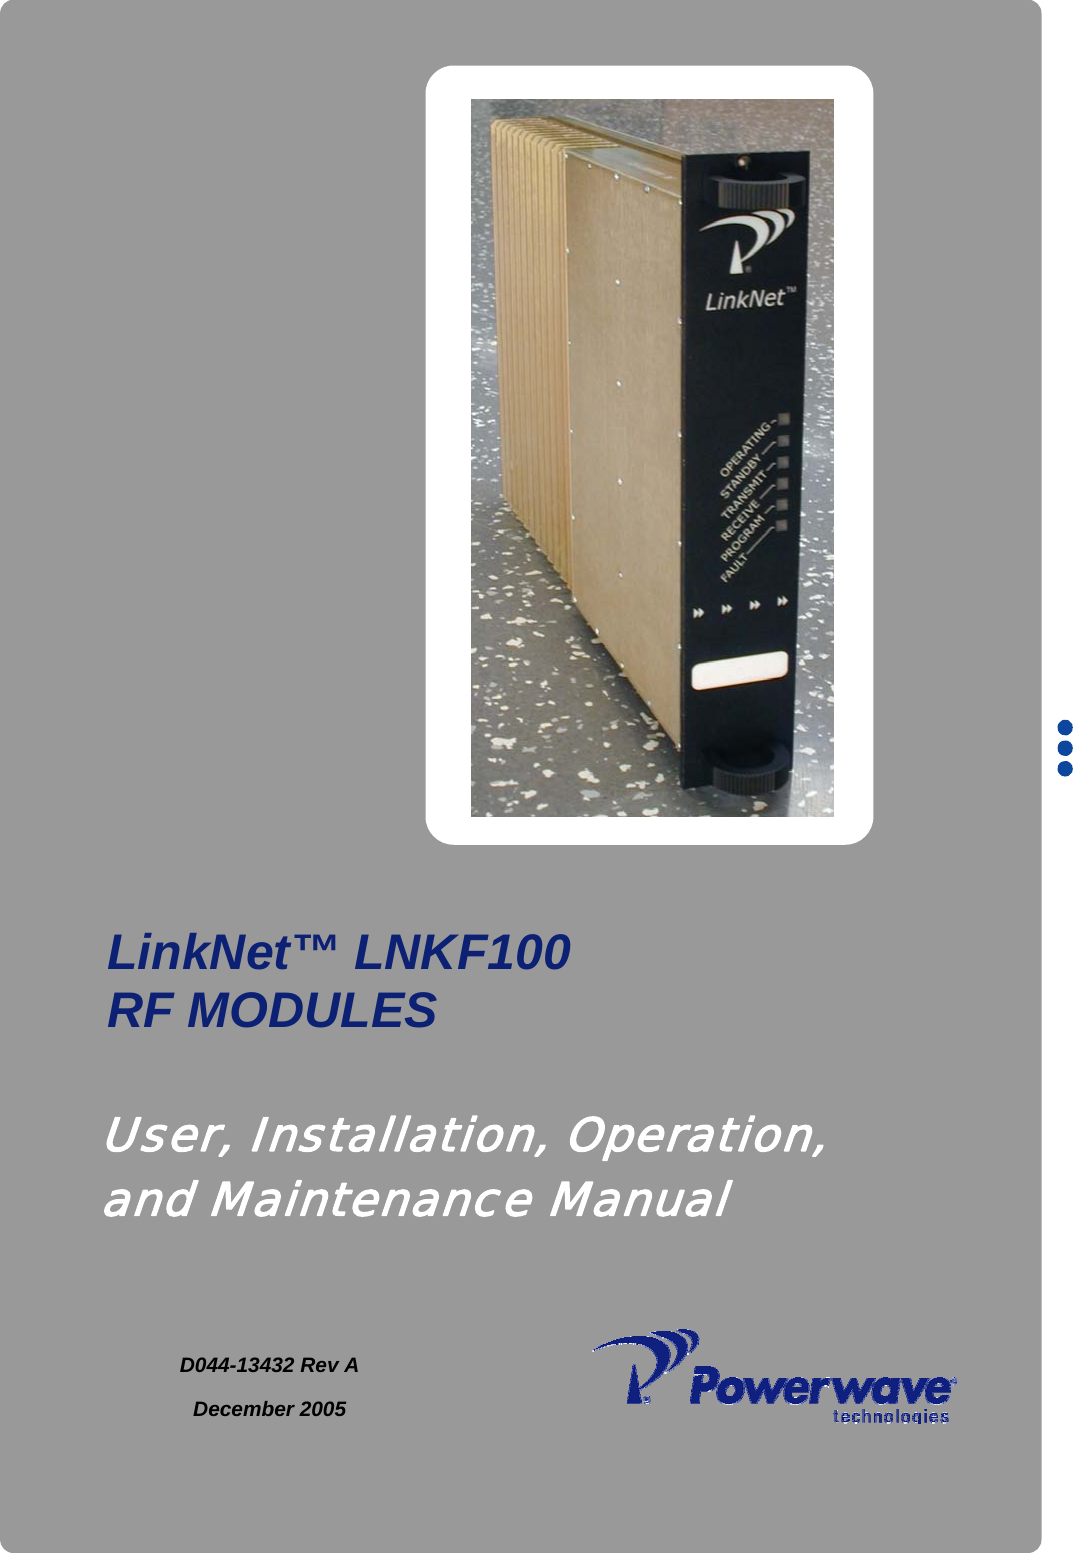           D044-13432 Rev A December 2005      LinkNet™ LNKF100  RF MODULES User, Installation, Operation, and Maintenance Manual 